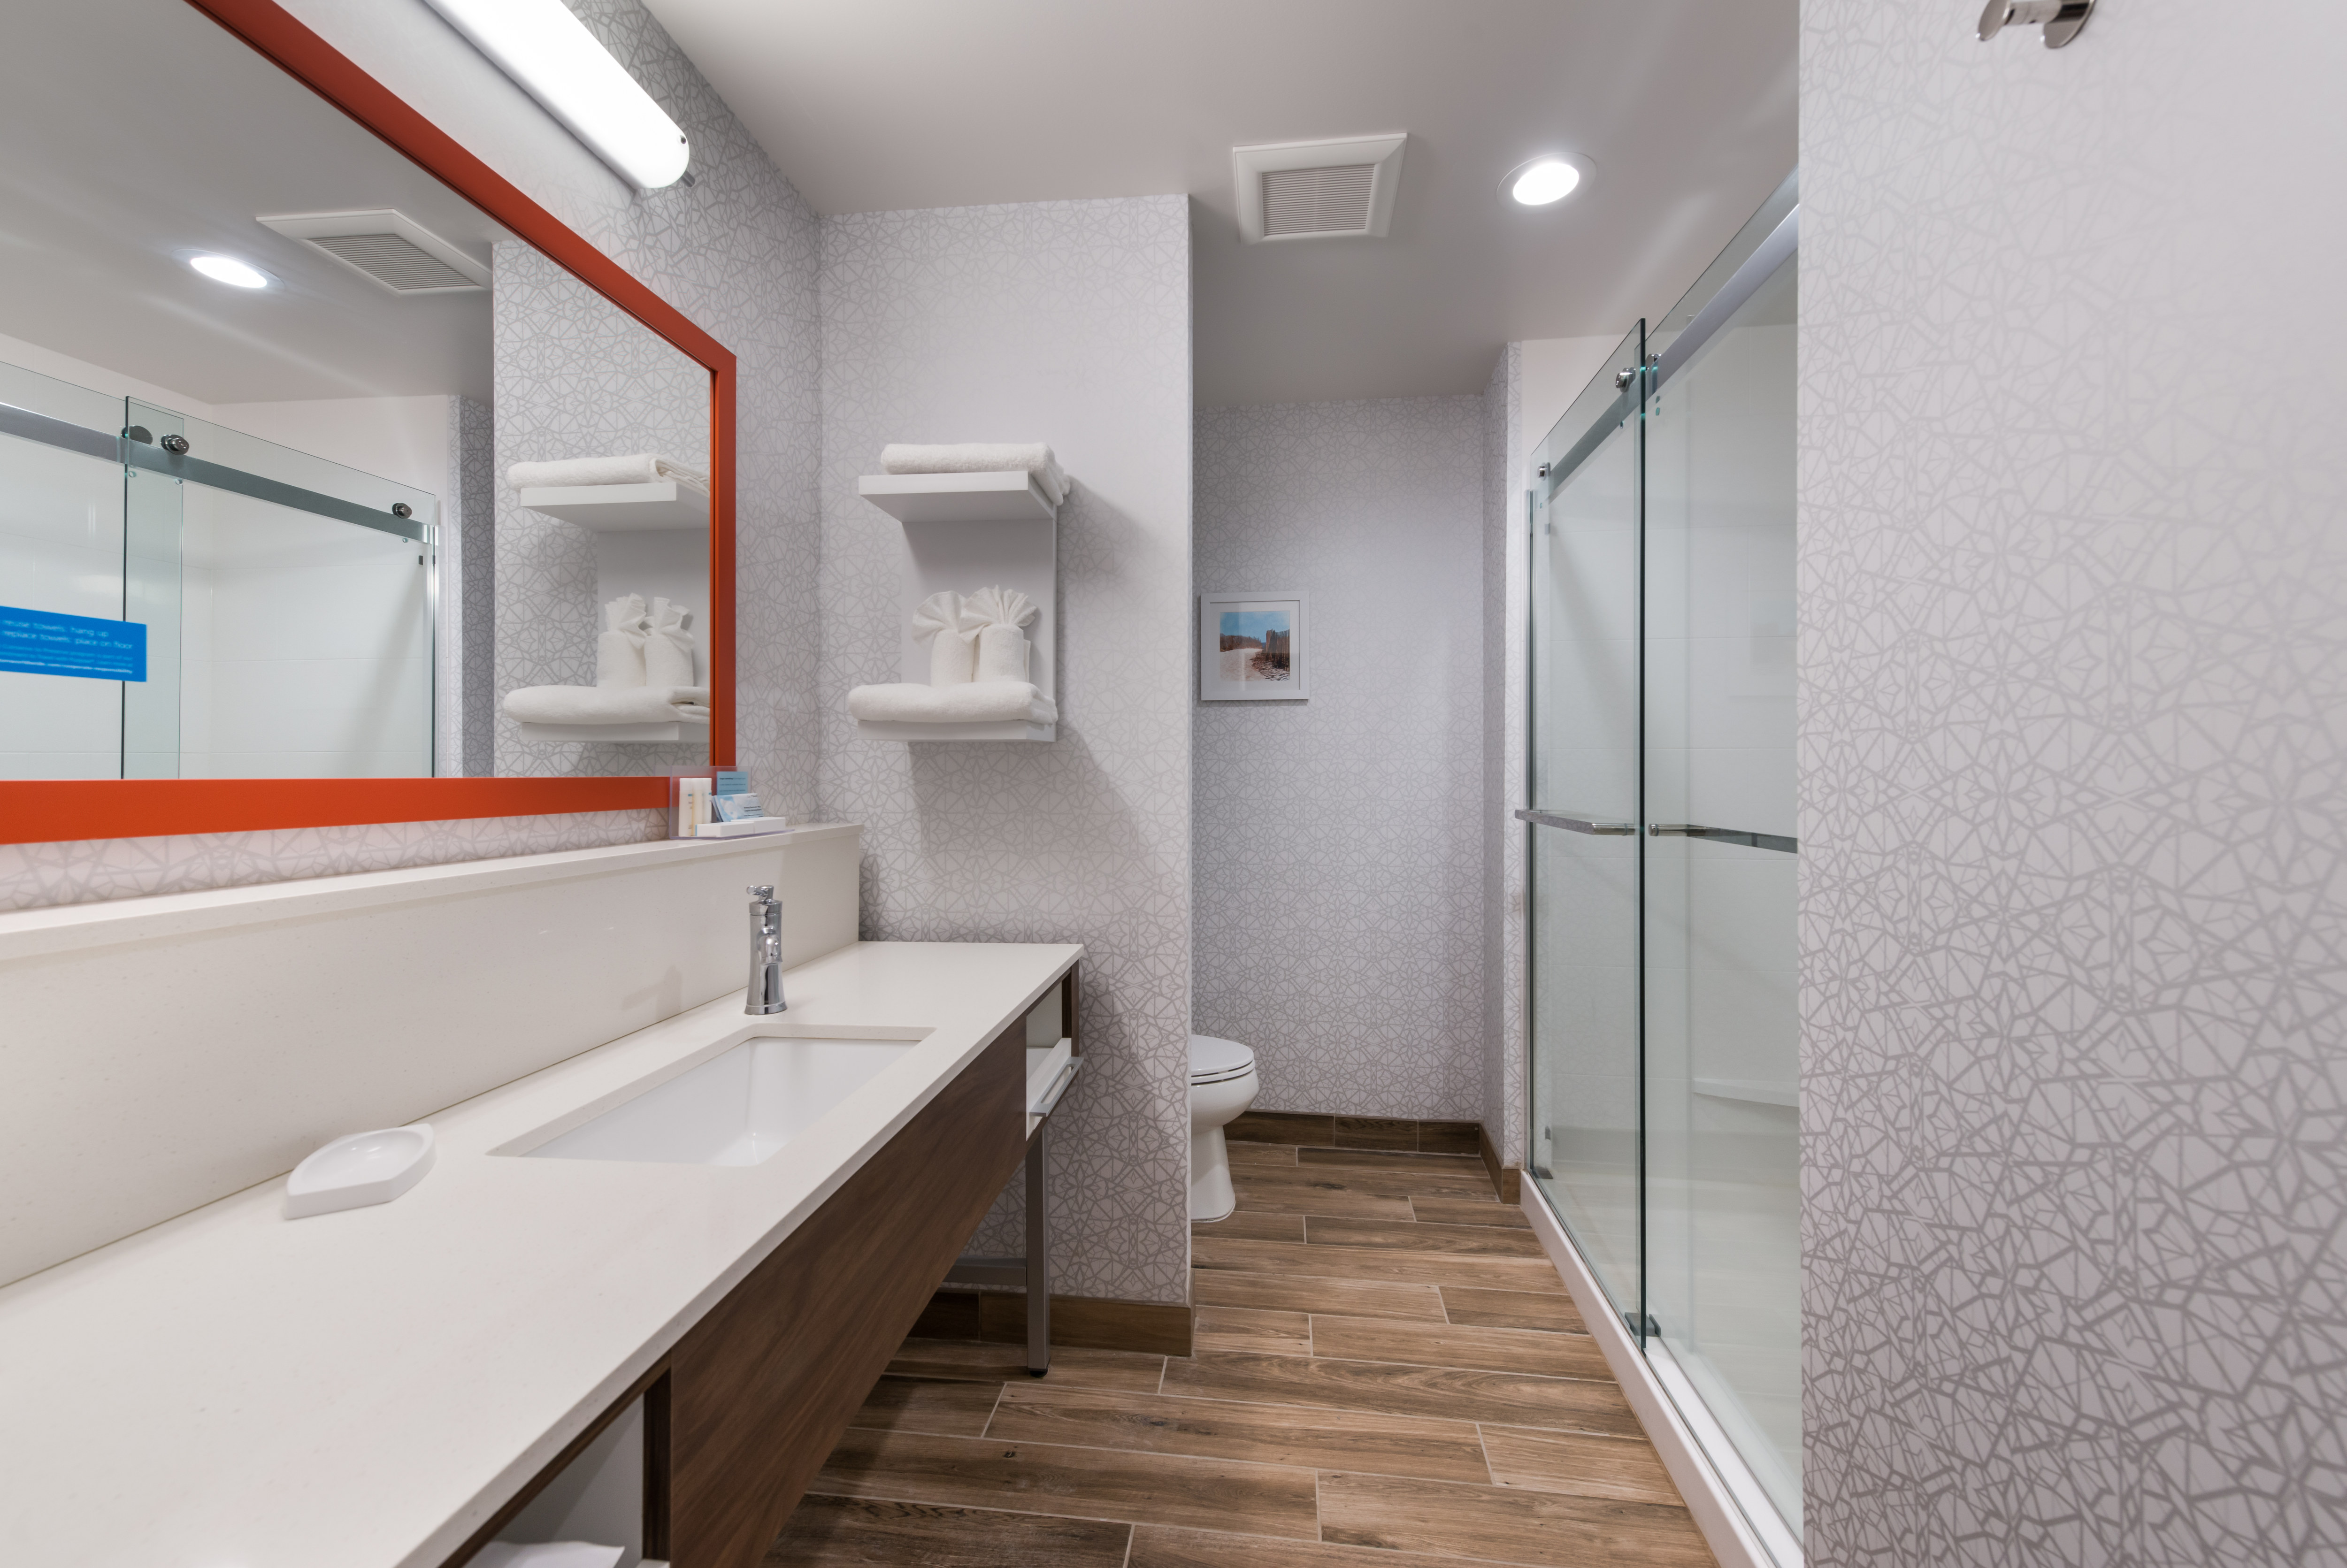 Bathroom Vanity Area and Shower with Glass Doors